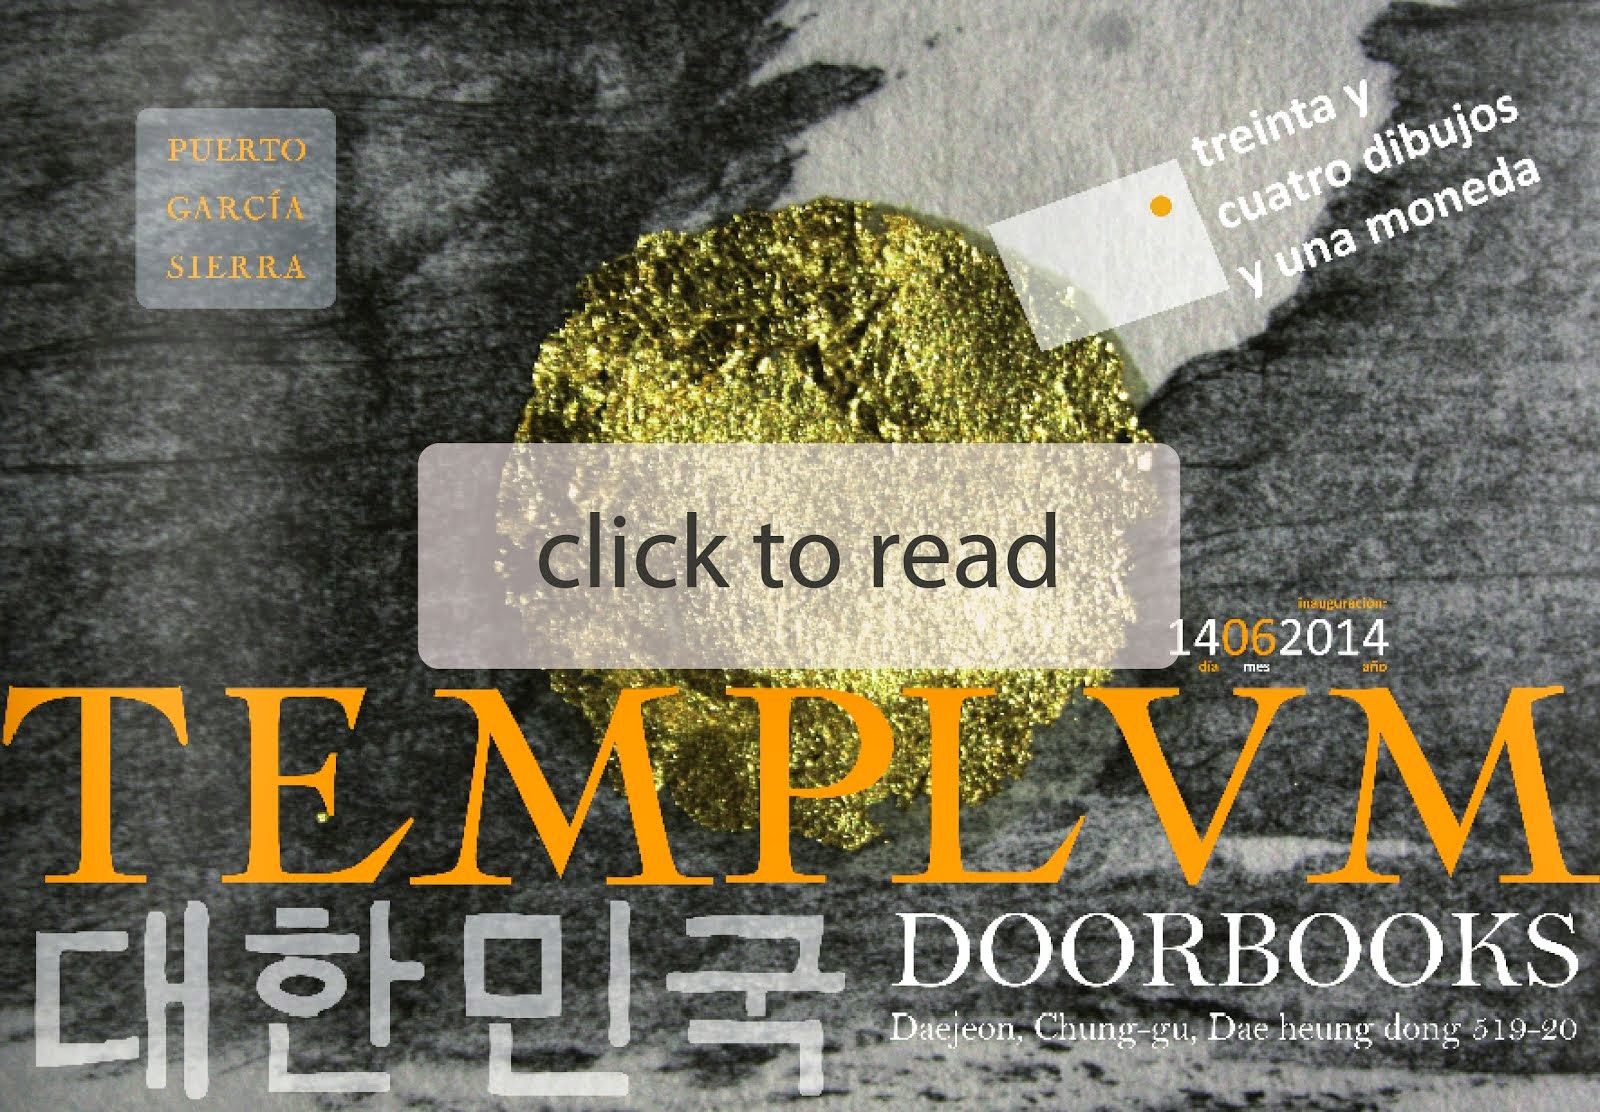 Revista Templvm Corea Daejeon